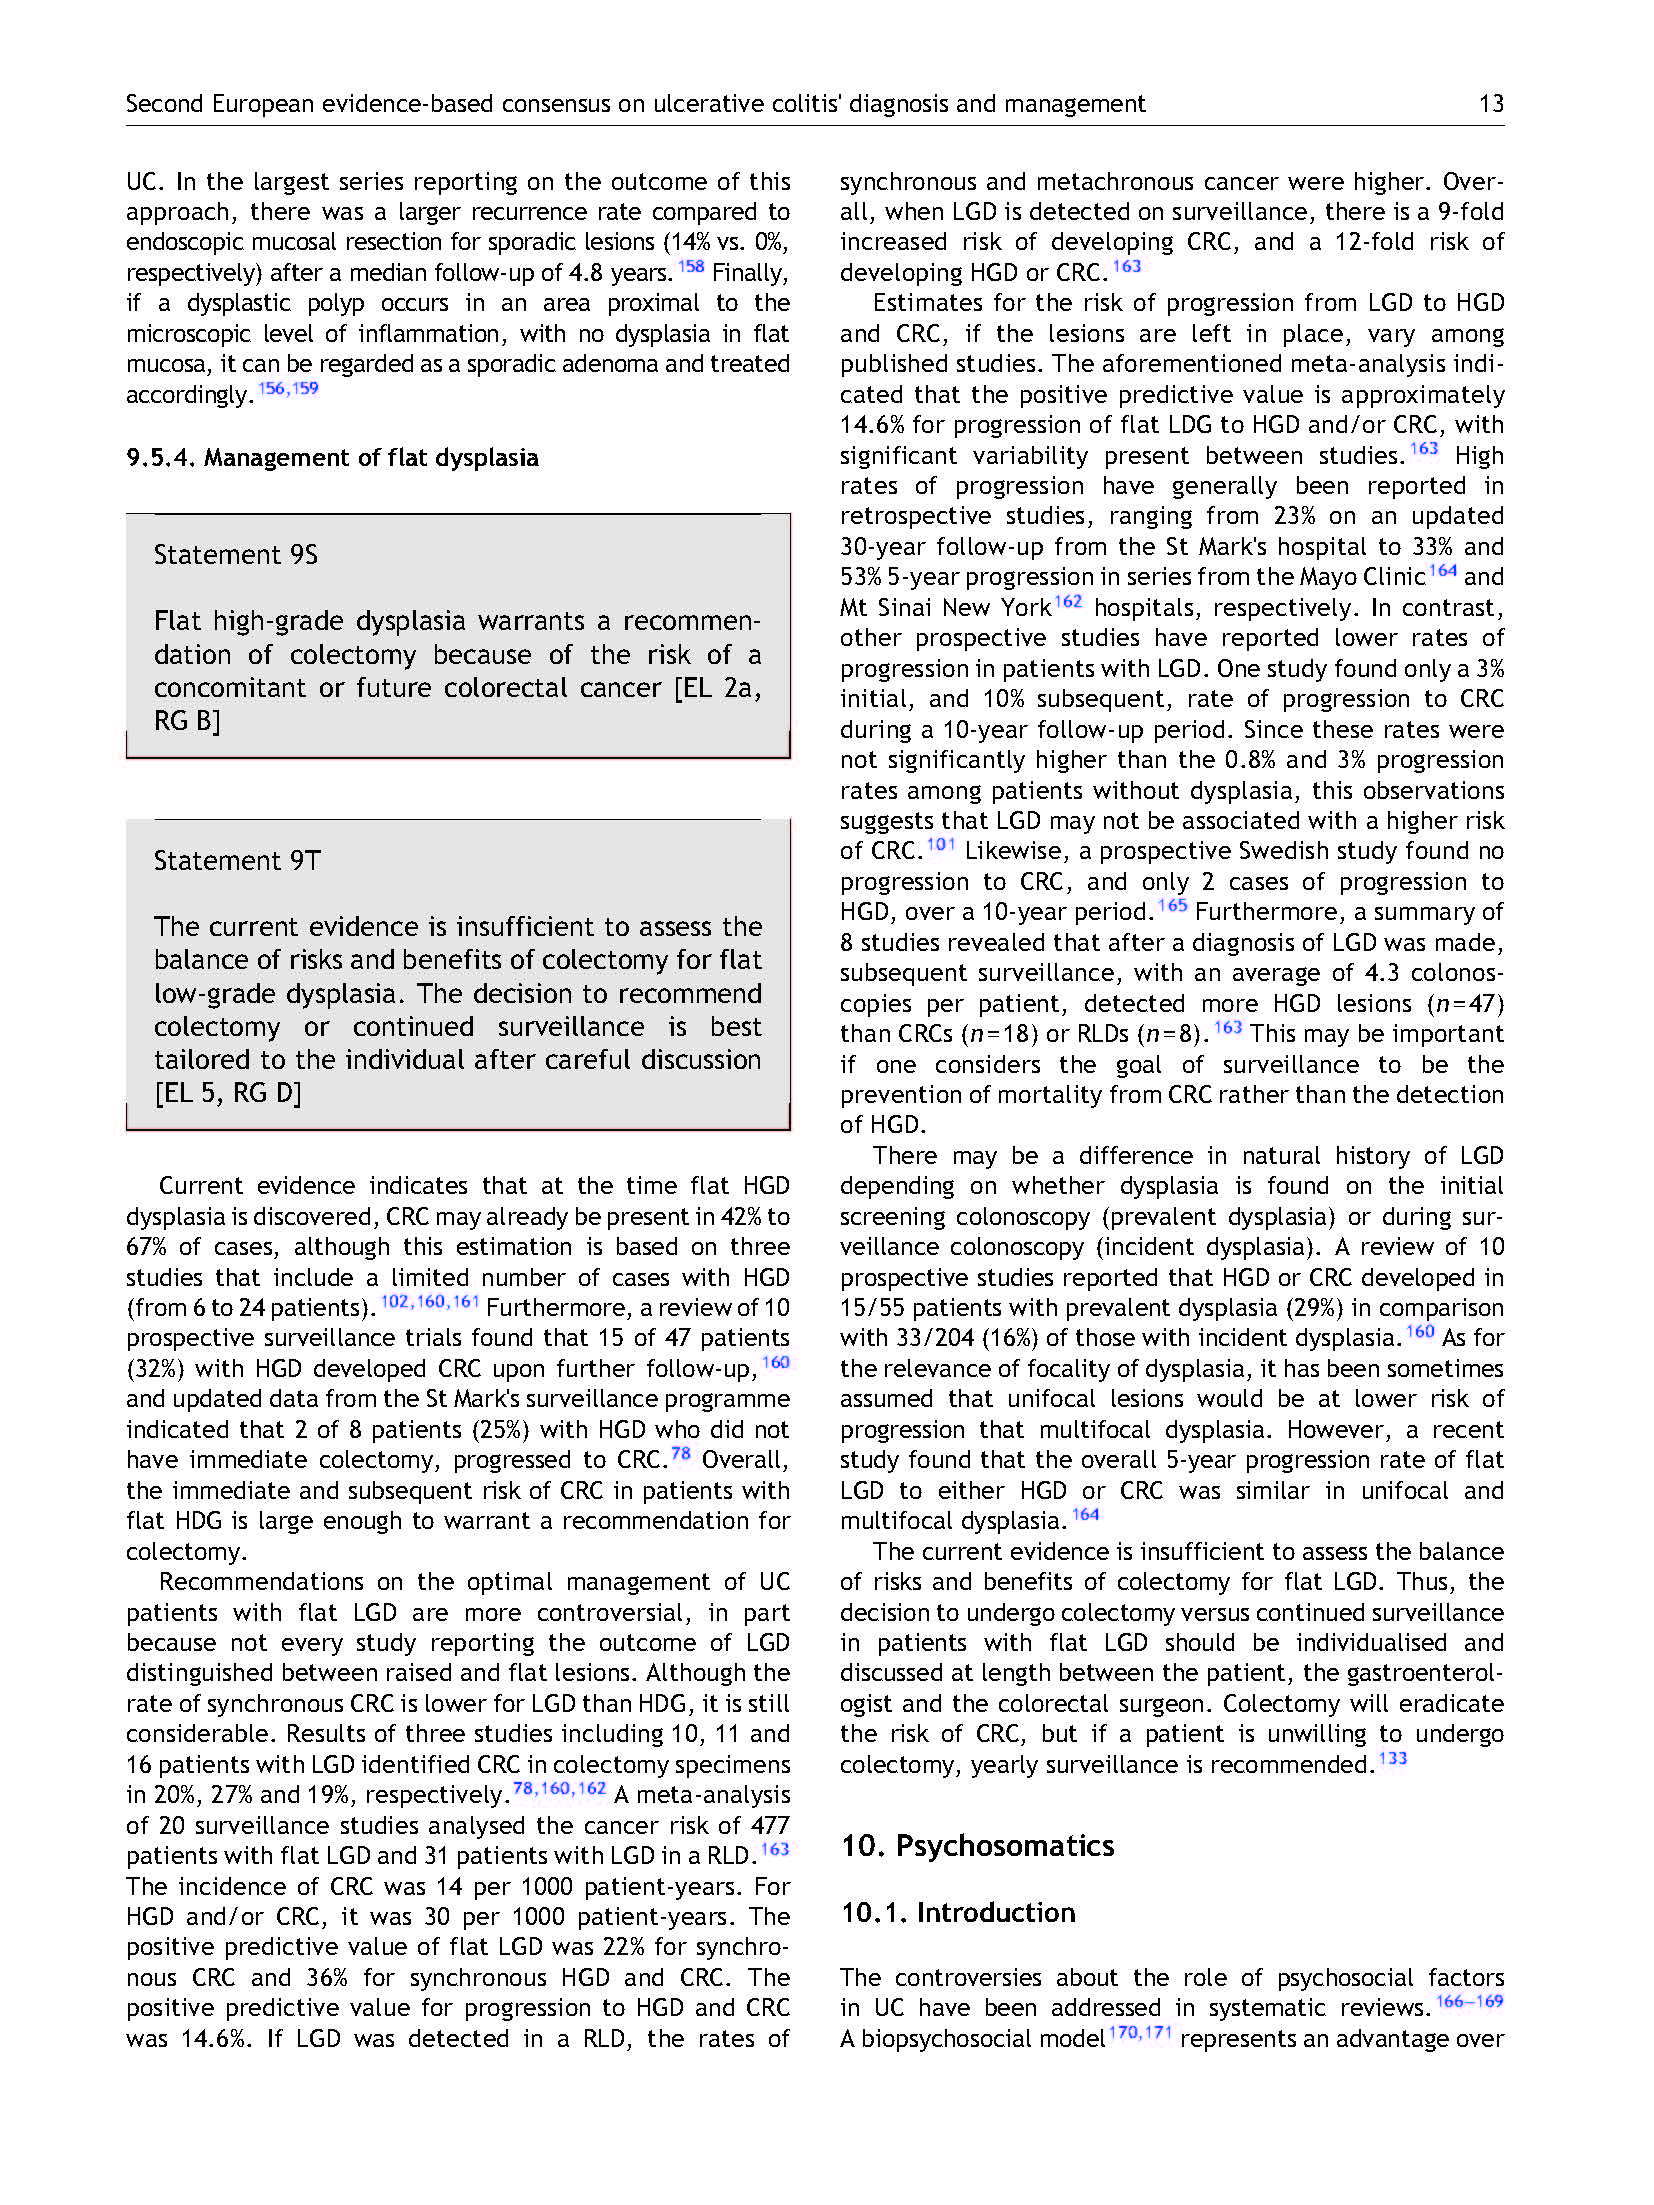 2012-ECCO第二版-欧洲询证共识：溃疡性结肠炎的诊断和处理—特殊情况_页面_13.jpg